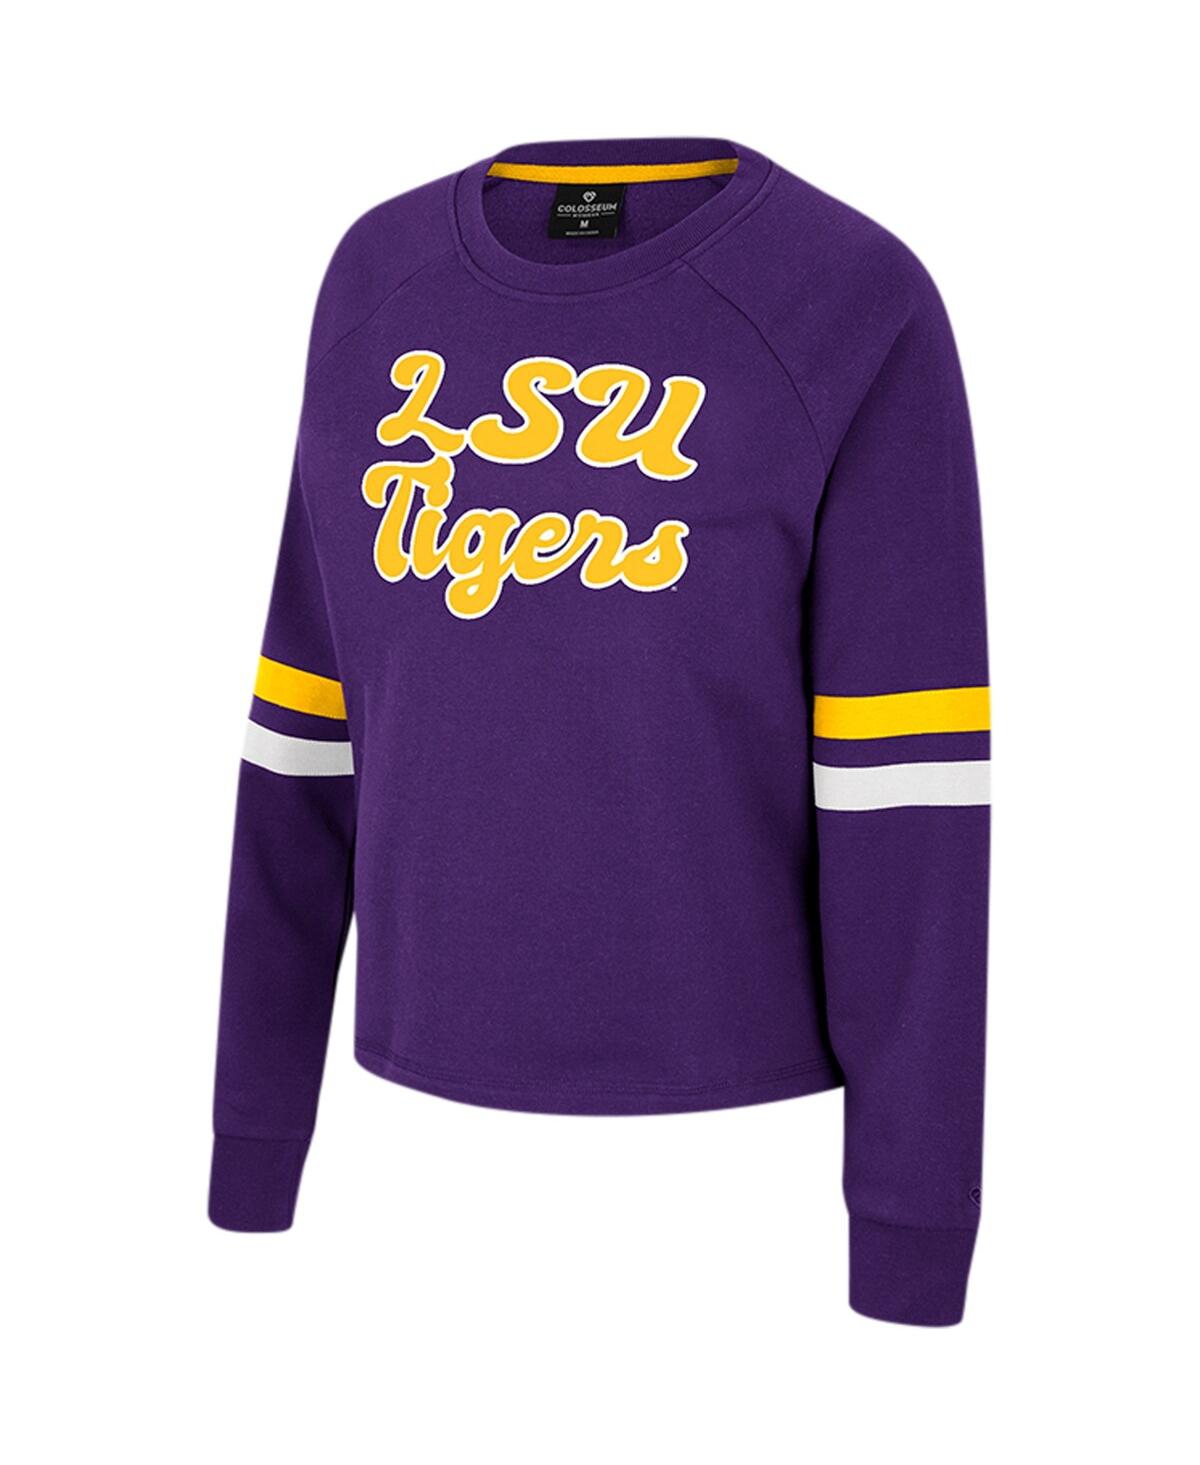 Shop Colosseum Women's  Purple Lsu Tigers Talent Competition Raglan Pullover Sweatshirt